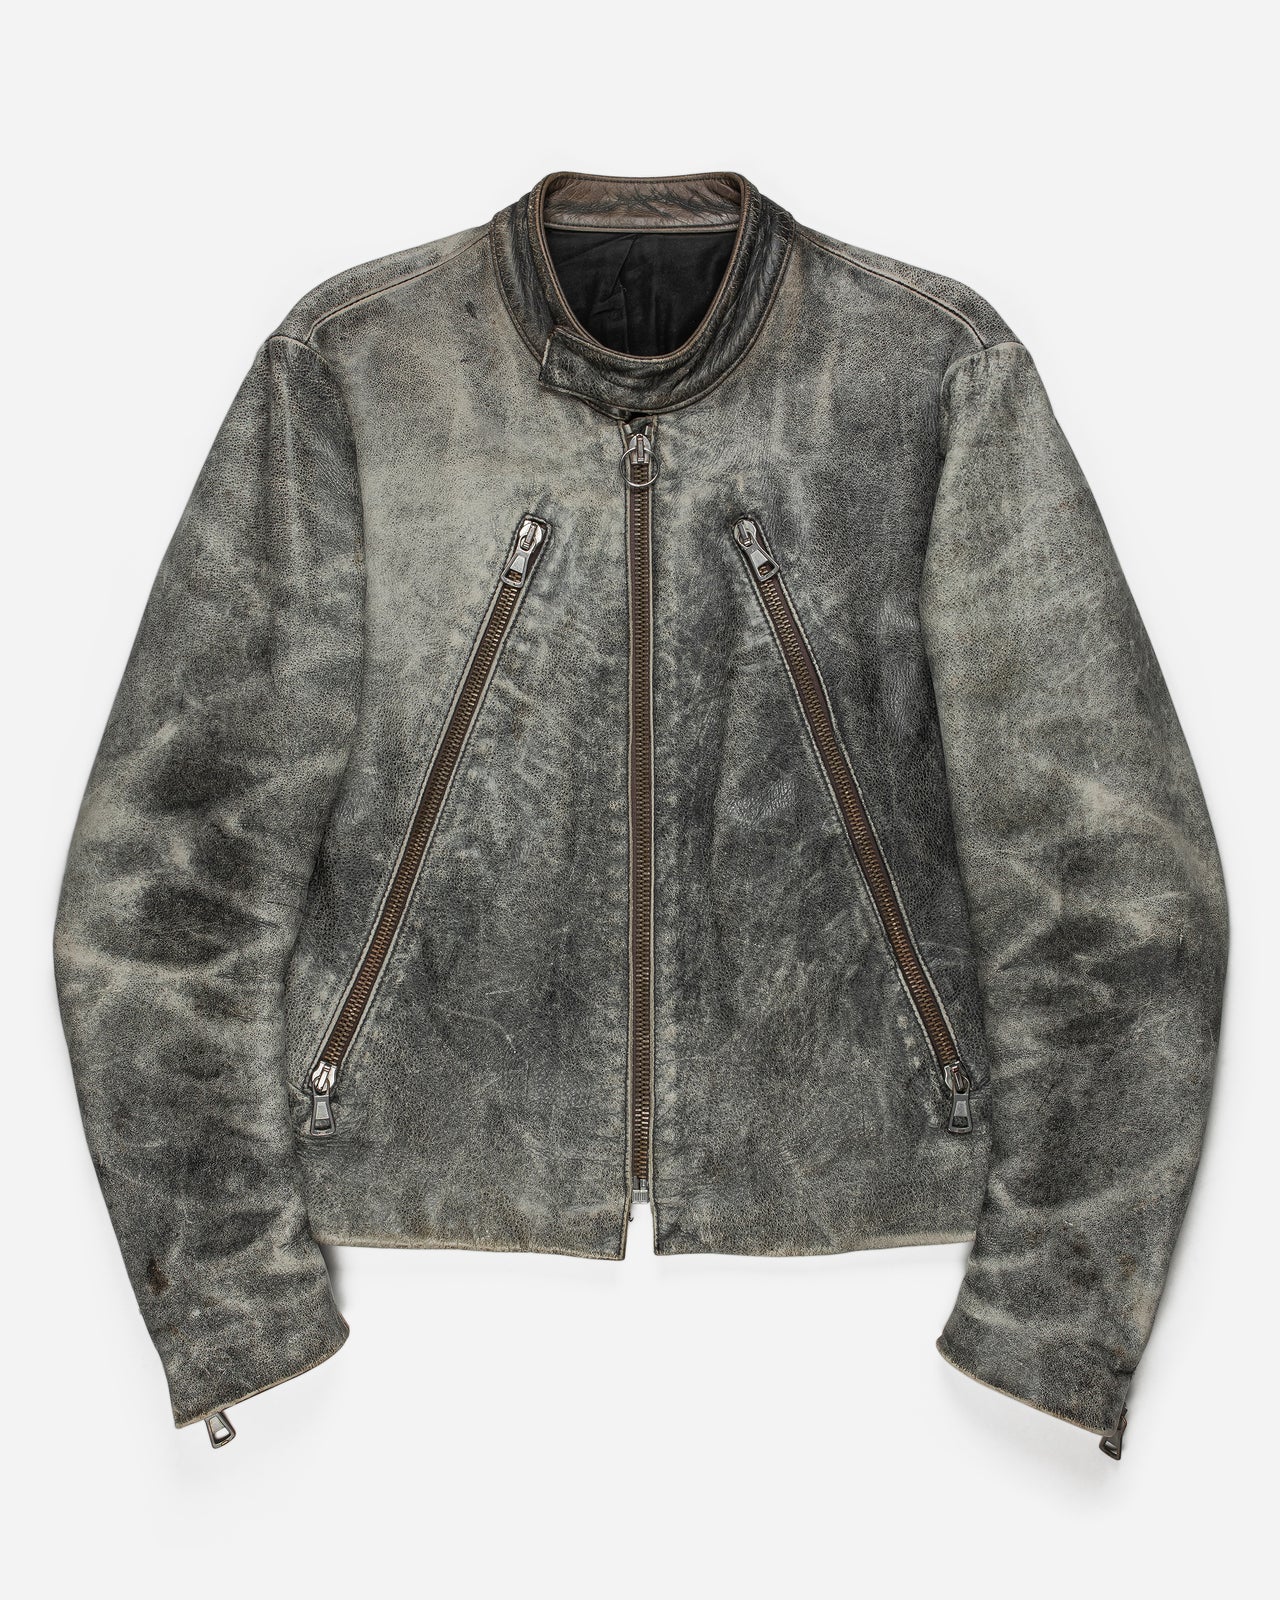 Maison Martin Margiela Five-Zip Distressed Leather Jacket - AW02